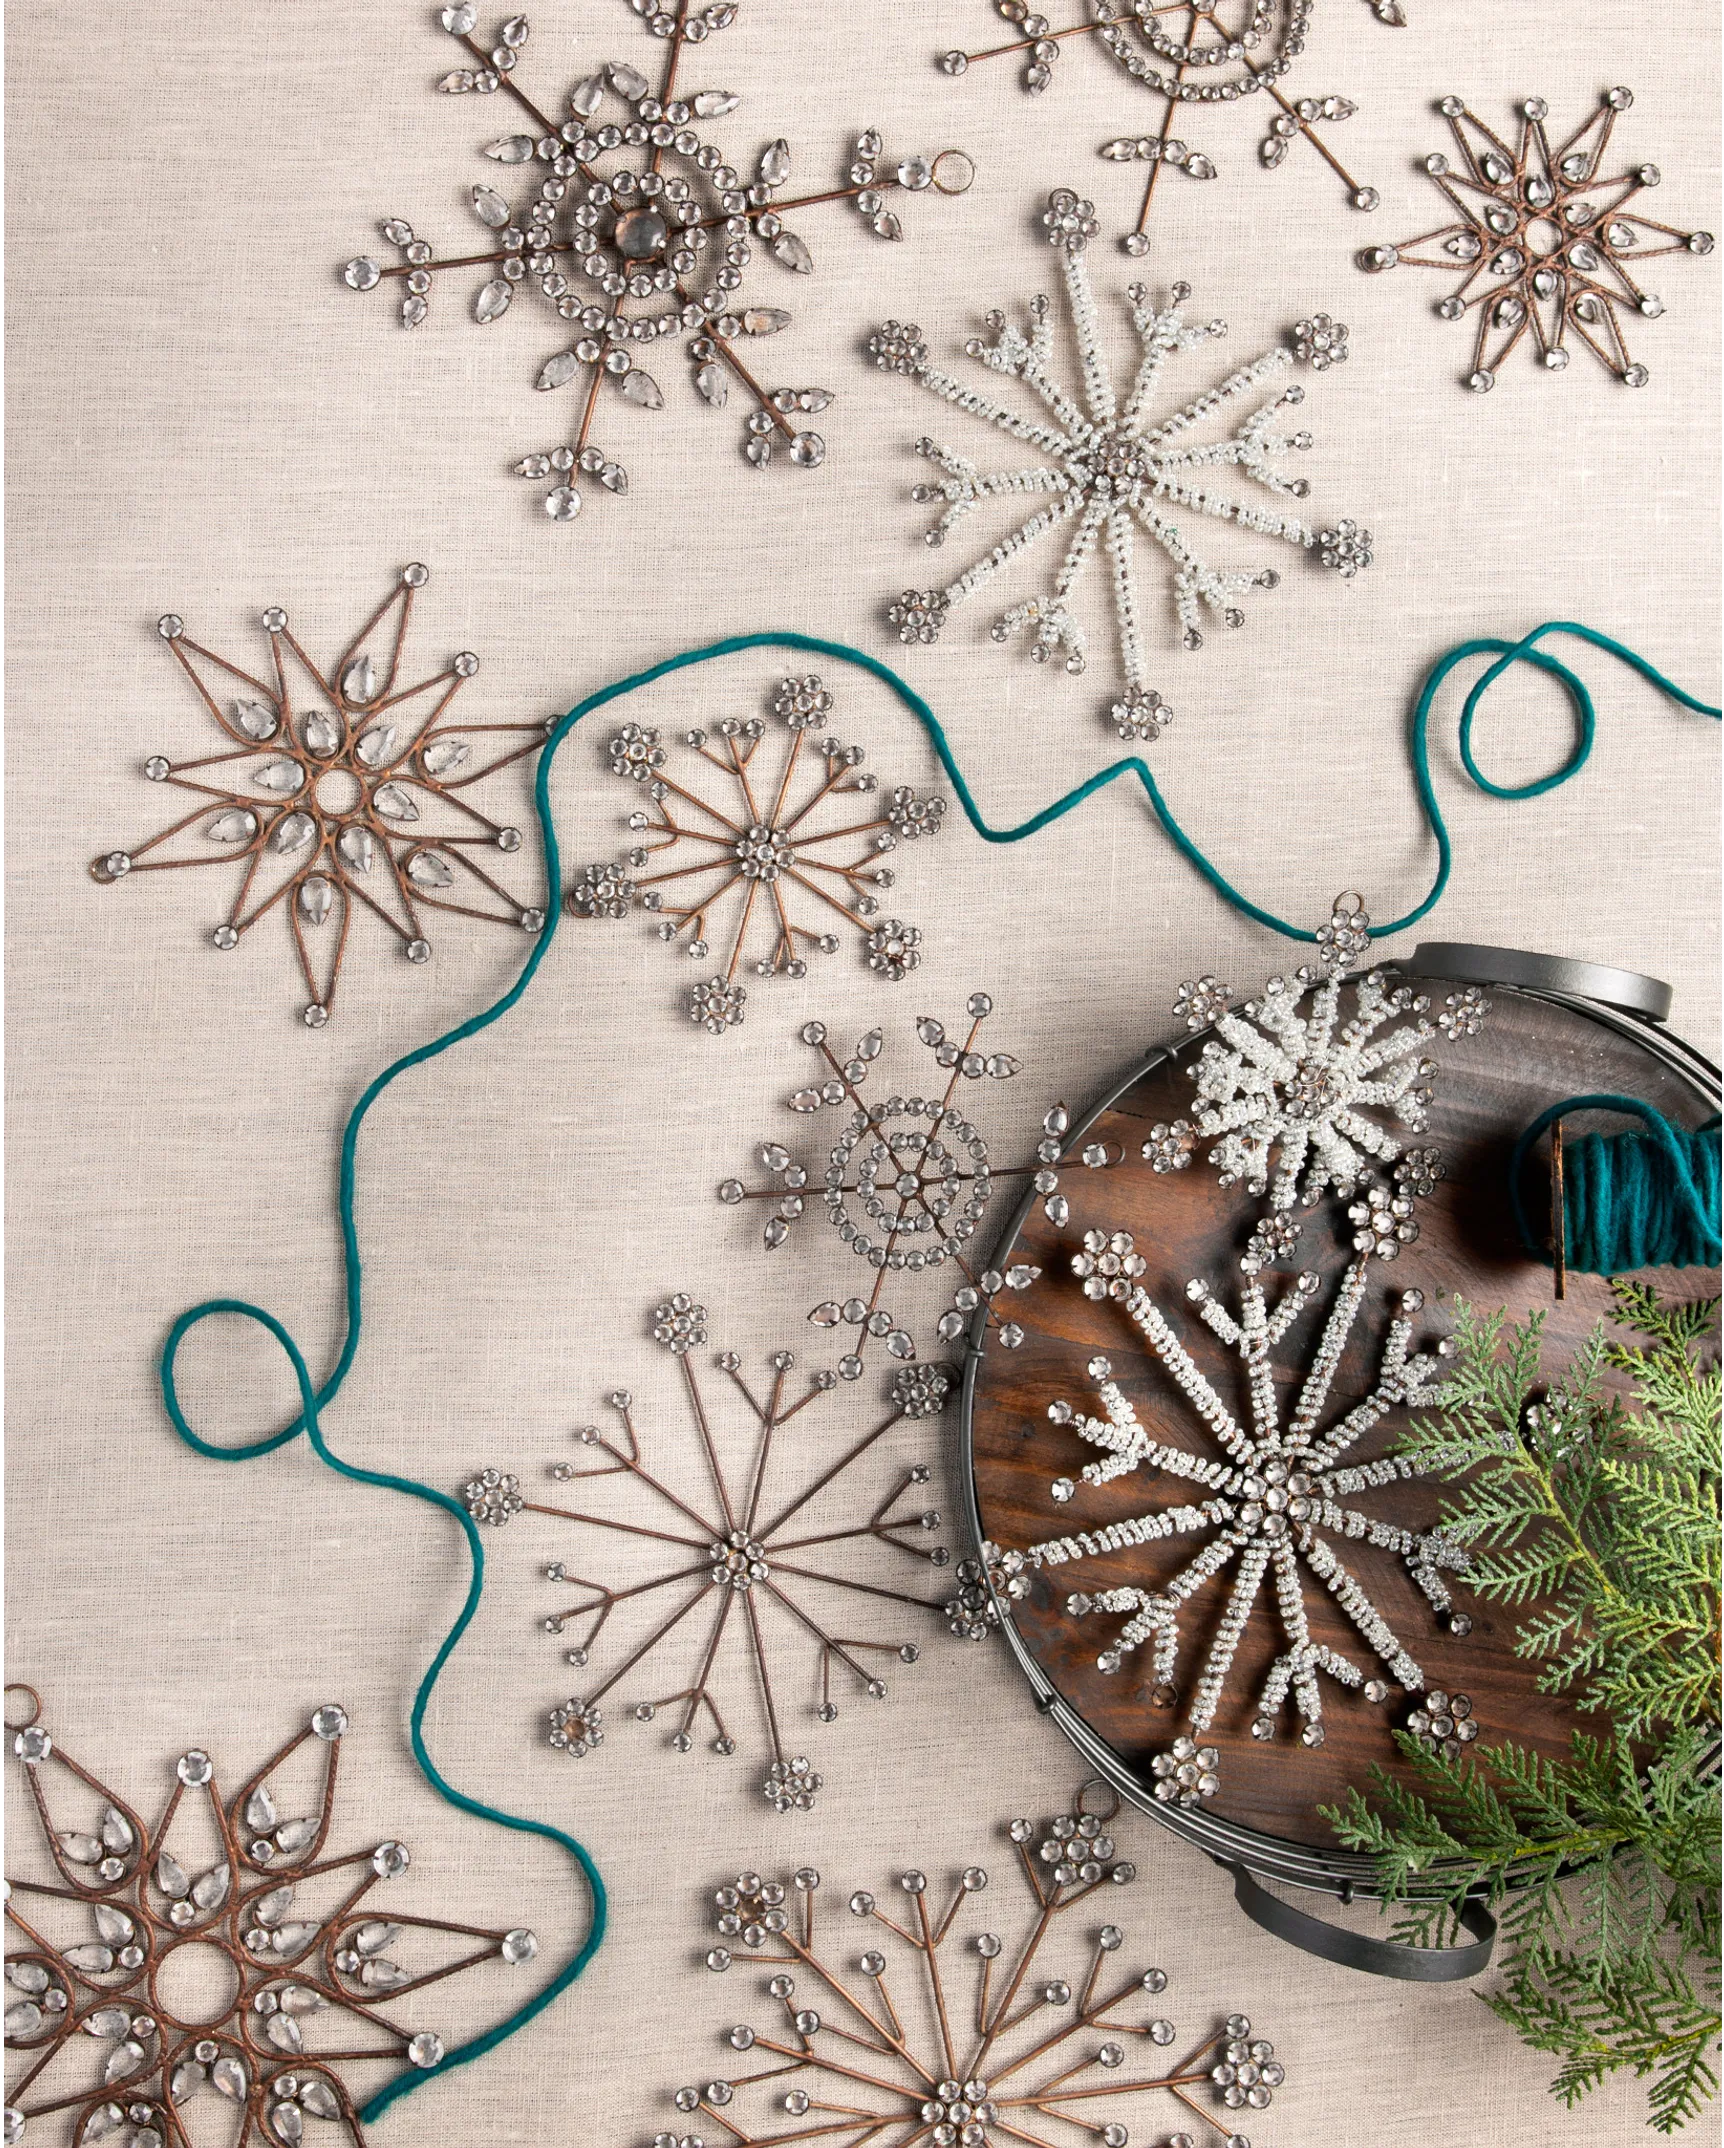 Small Snowflake Christmas ornaments - Homemade gifts